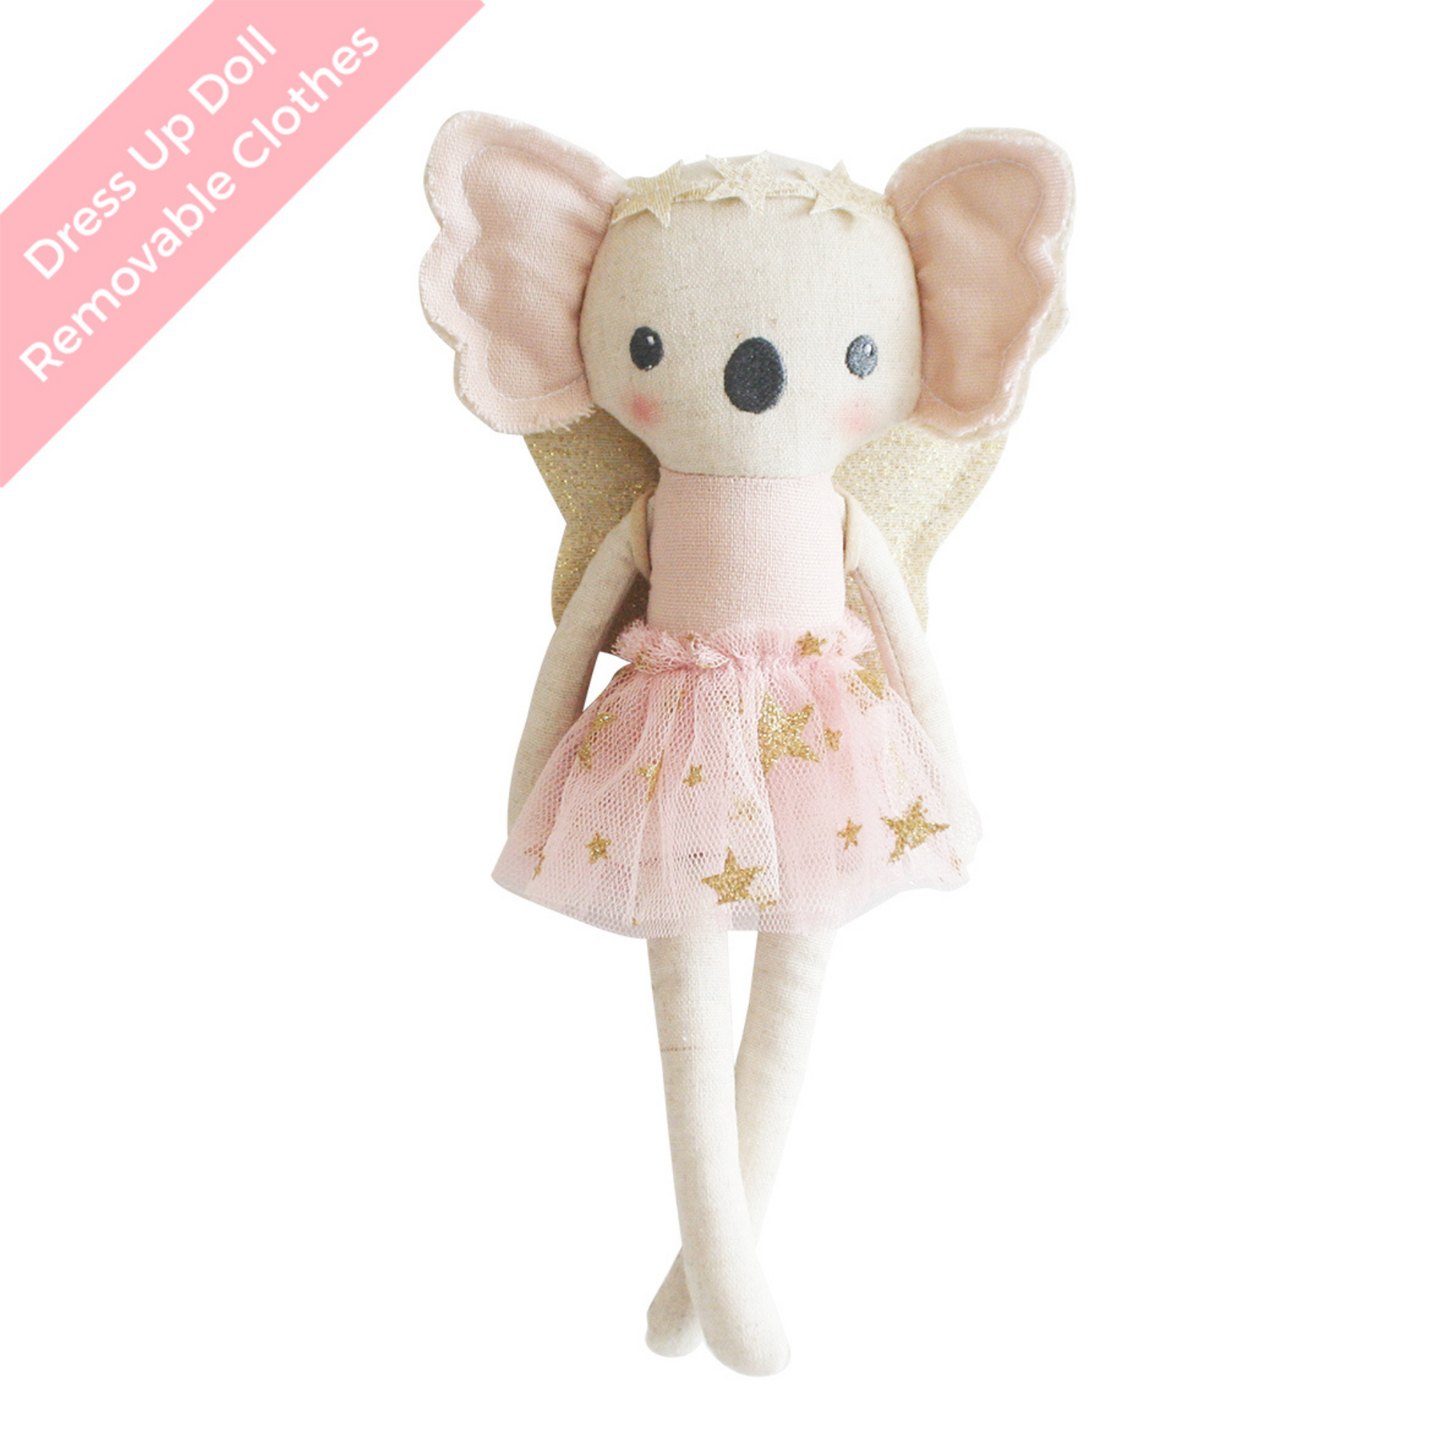 Mini Koala Dress Up Doll, Pink/Gold